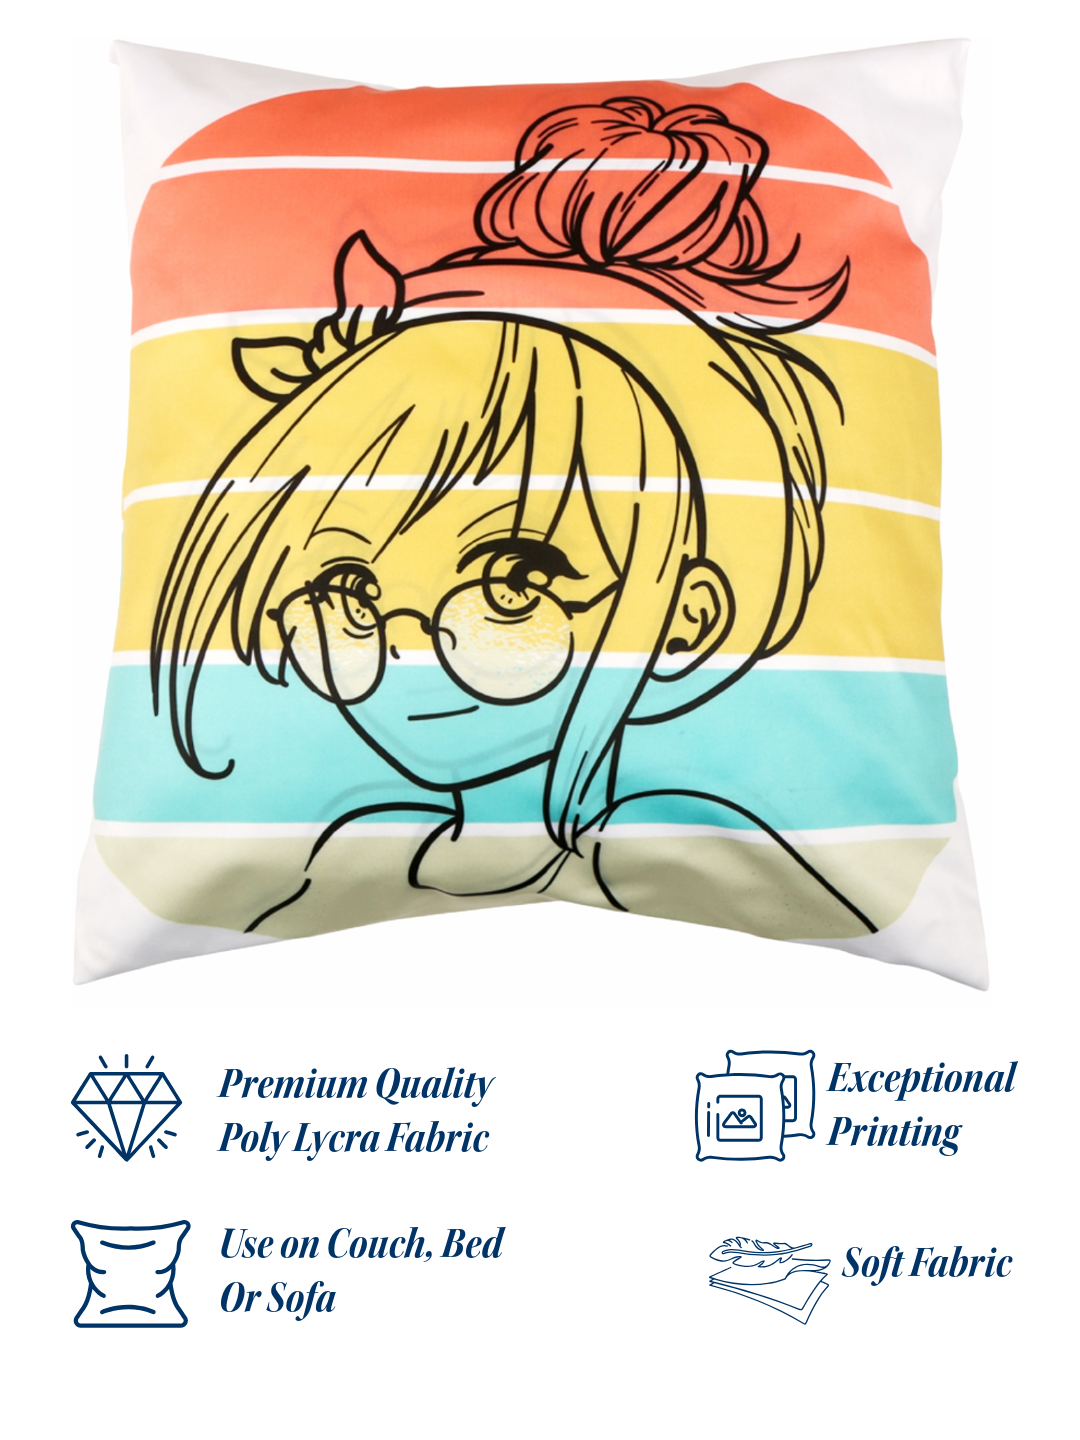 Anime Cushion Cover - Printed - Ayuda Homes